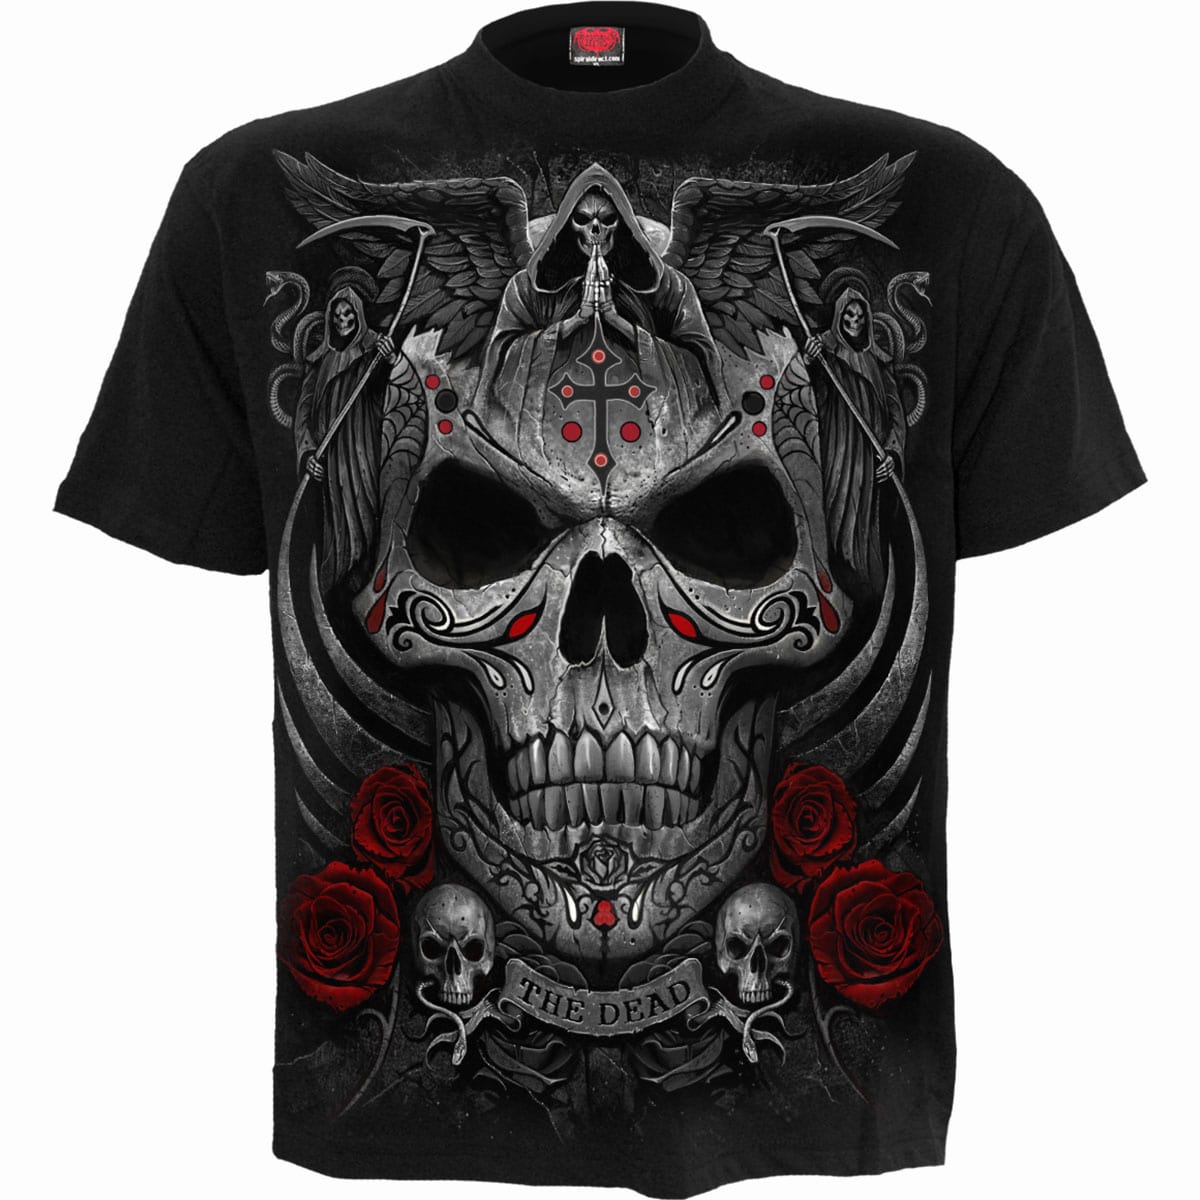 THE DEAD - T-Shirt Black – Spiral USA